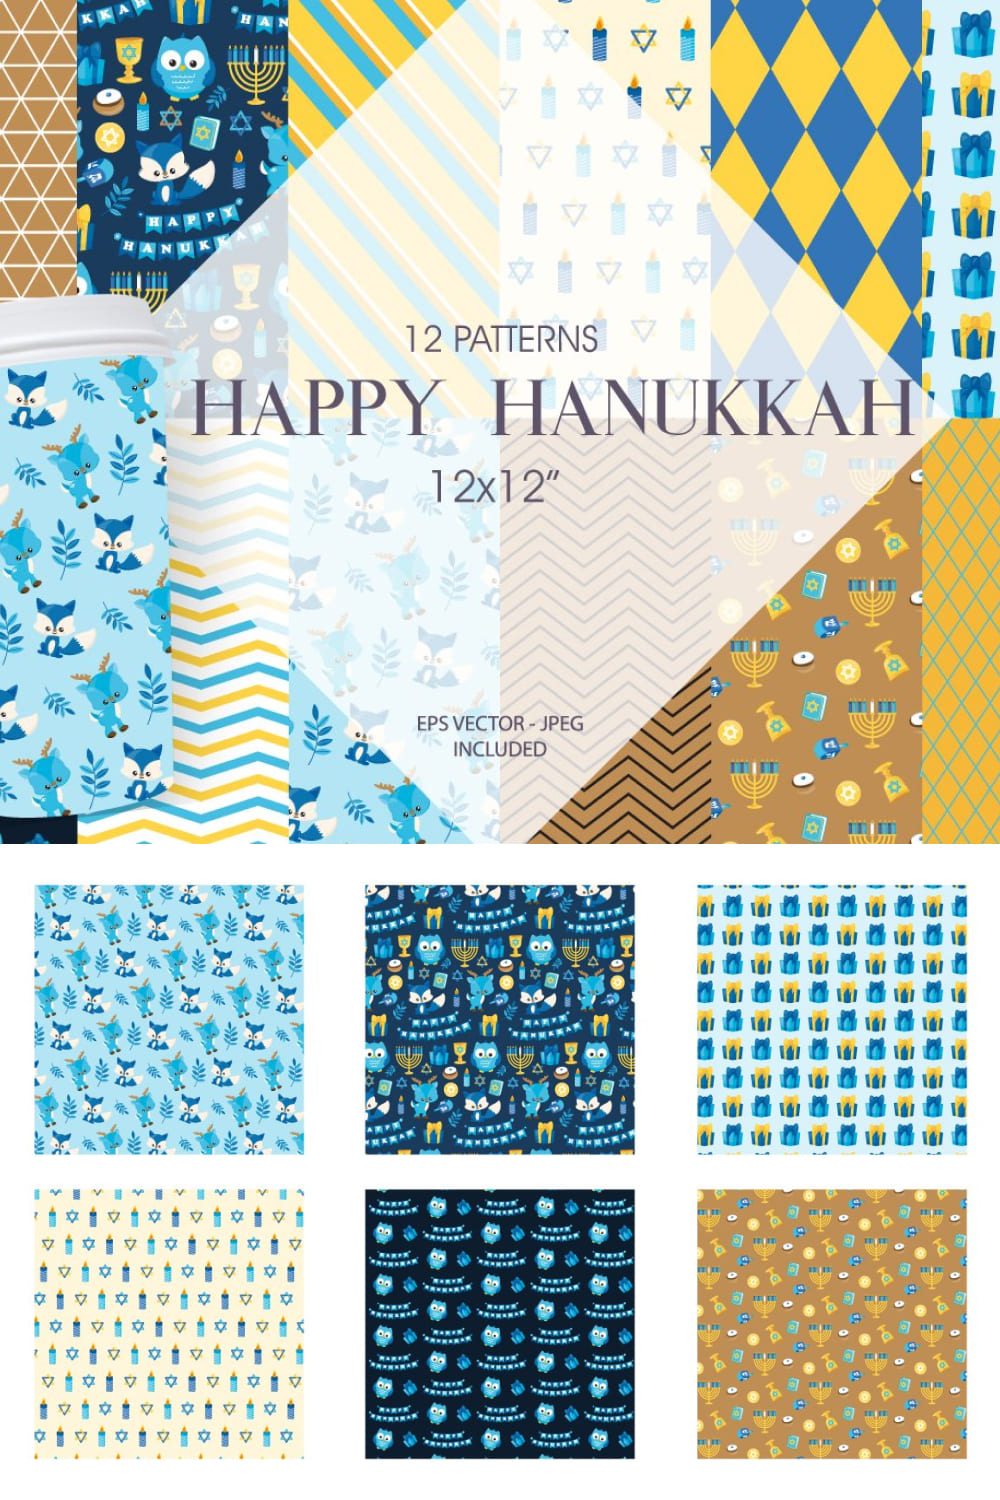 Happy hanukkah papers graphic illustration of pinterest.